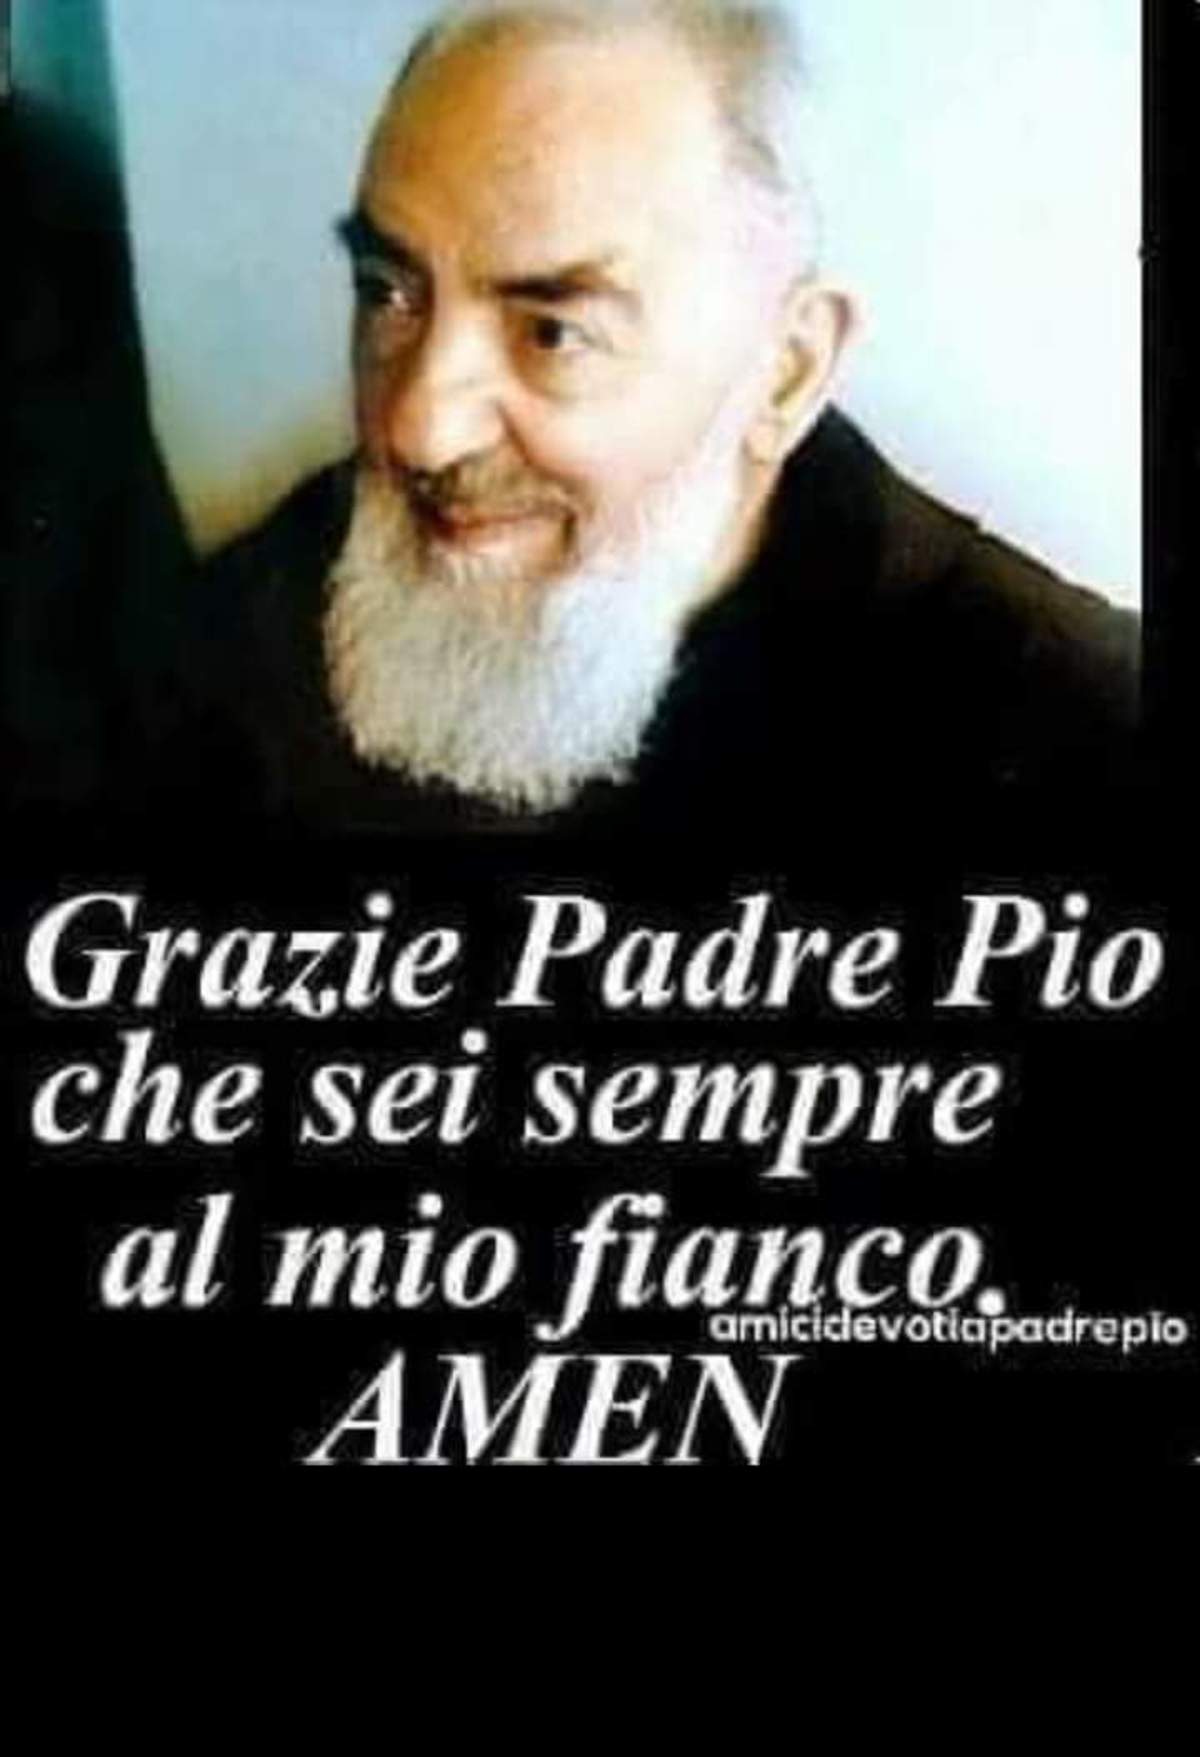 Padre Pio immagini da mandare su facebook 7746